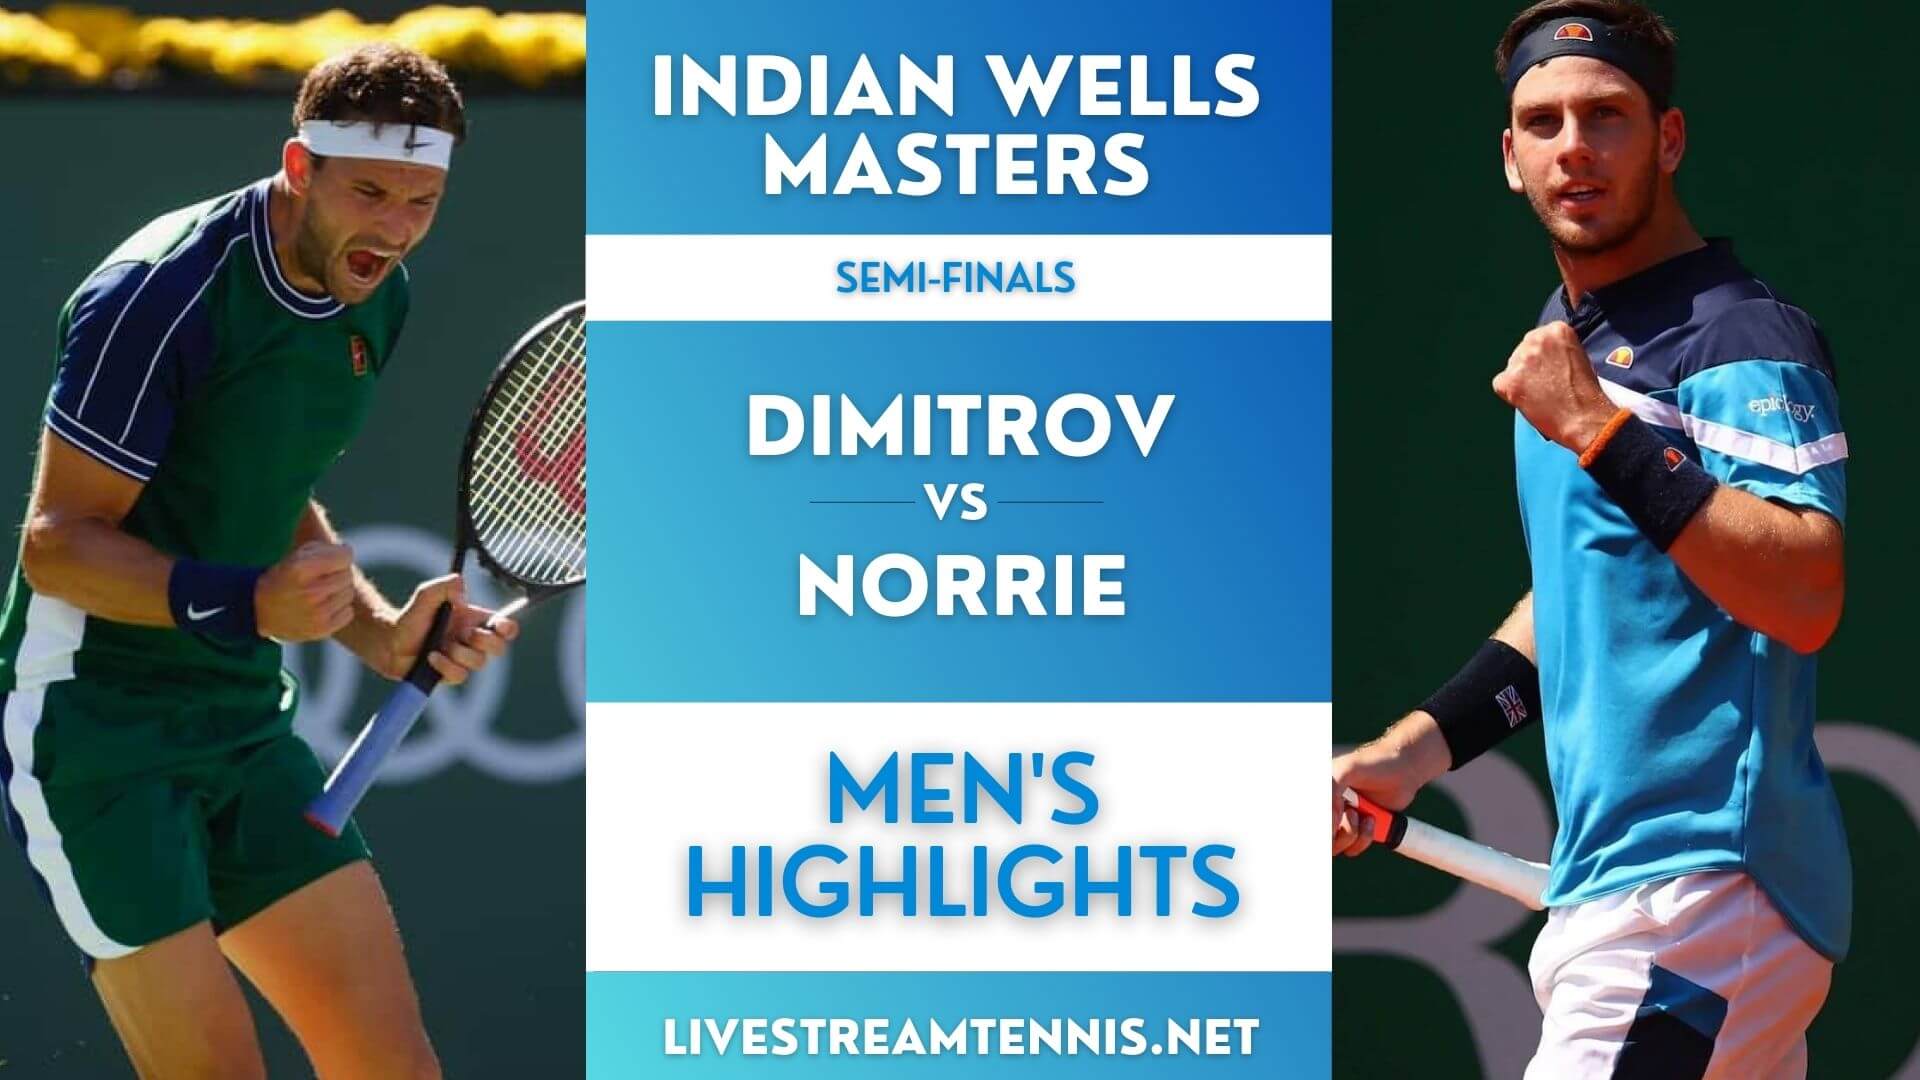 Indian Wells Masters Men Semi Final 2 Highlights 2021